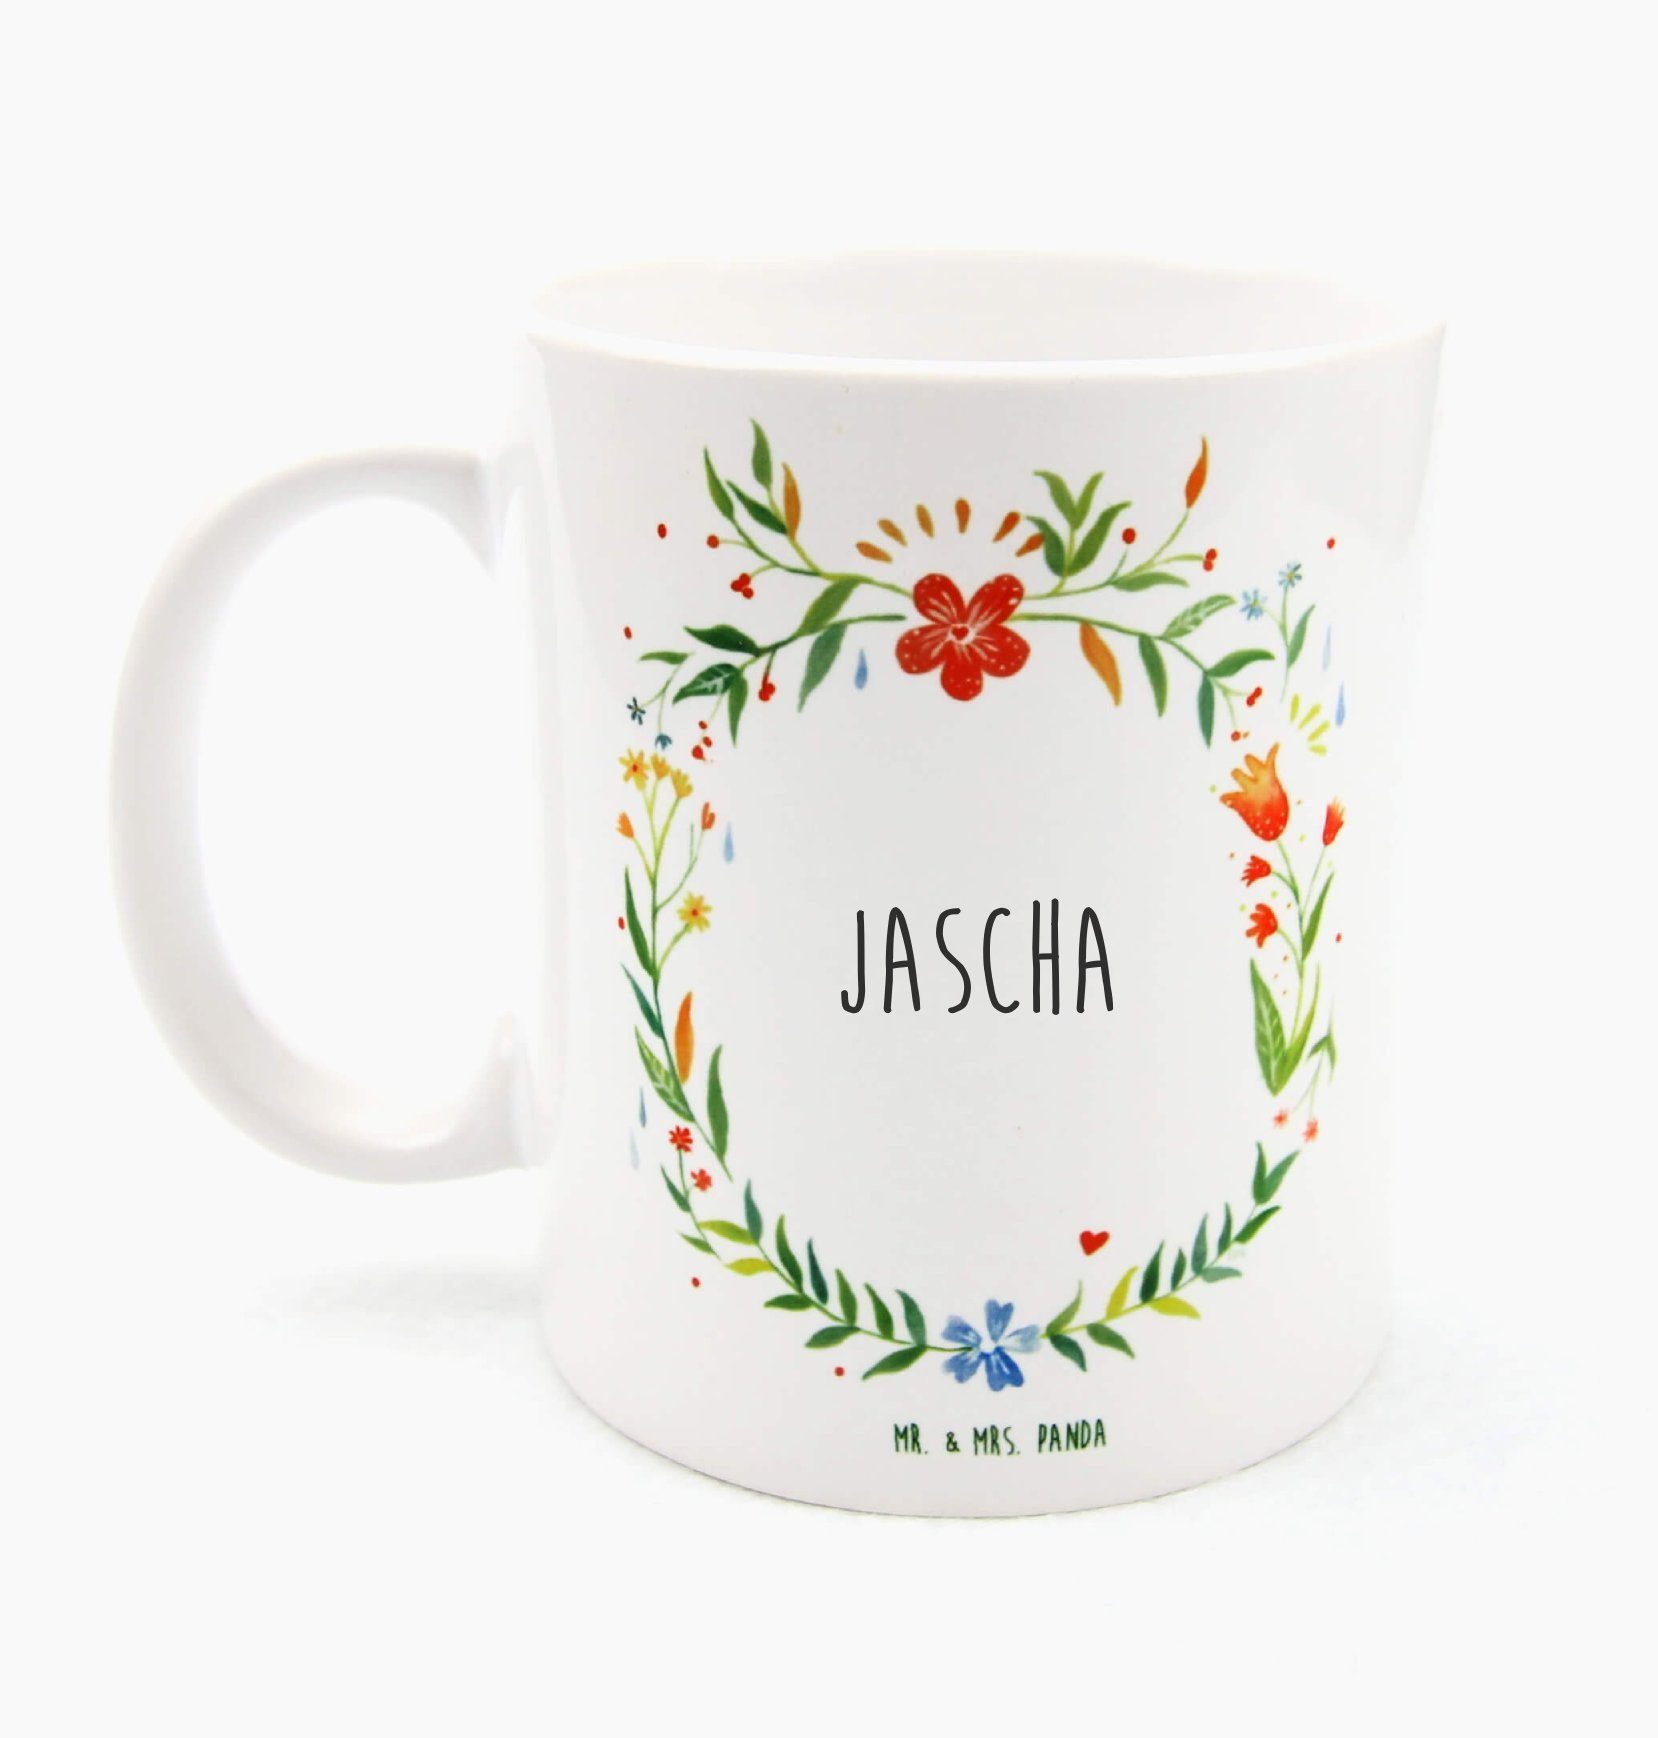 Mr. & Mrs. Panda Tasse Jascha - Geschenk, Geschenk Tasse, Büro Tasse, Kaffeebecher, Tasse Sp, Keramik